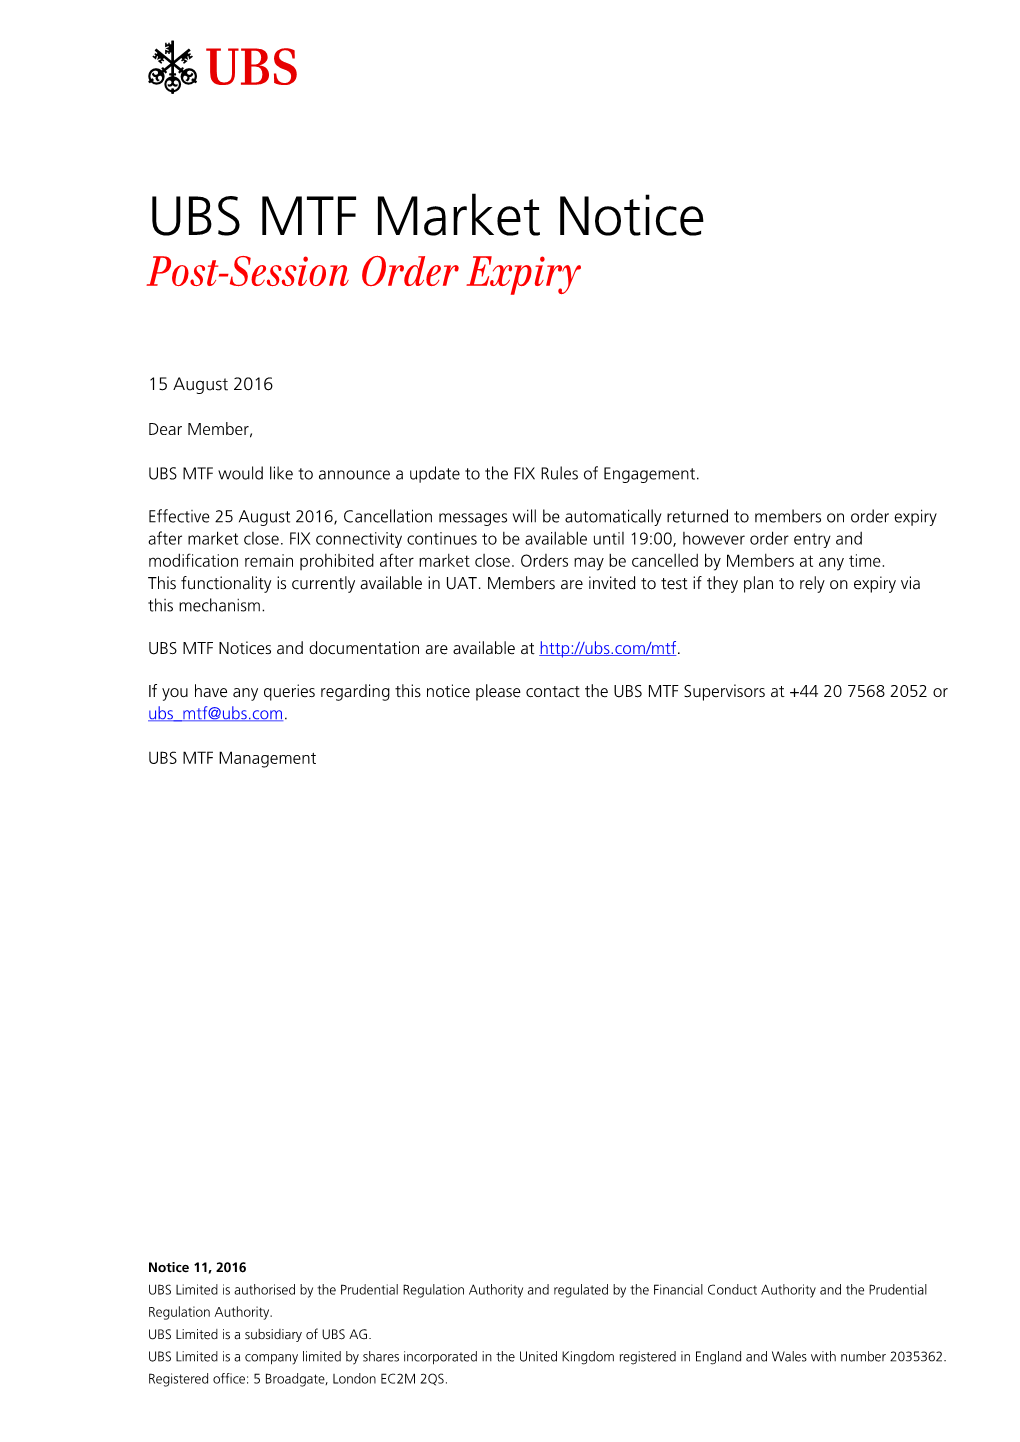 Notice N11 2016: Order Expiry